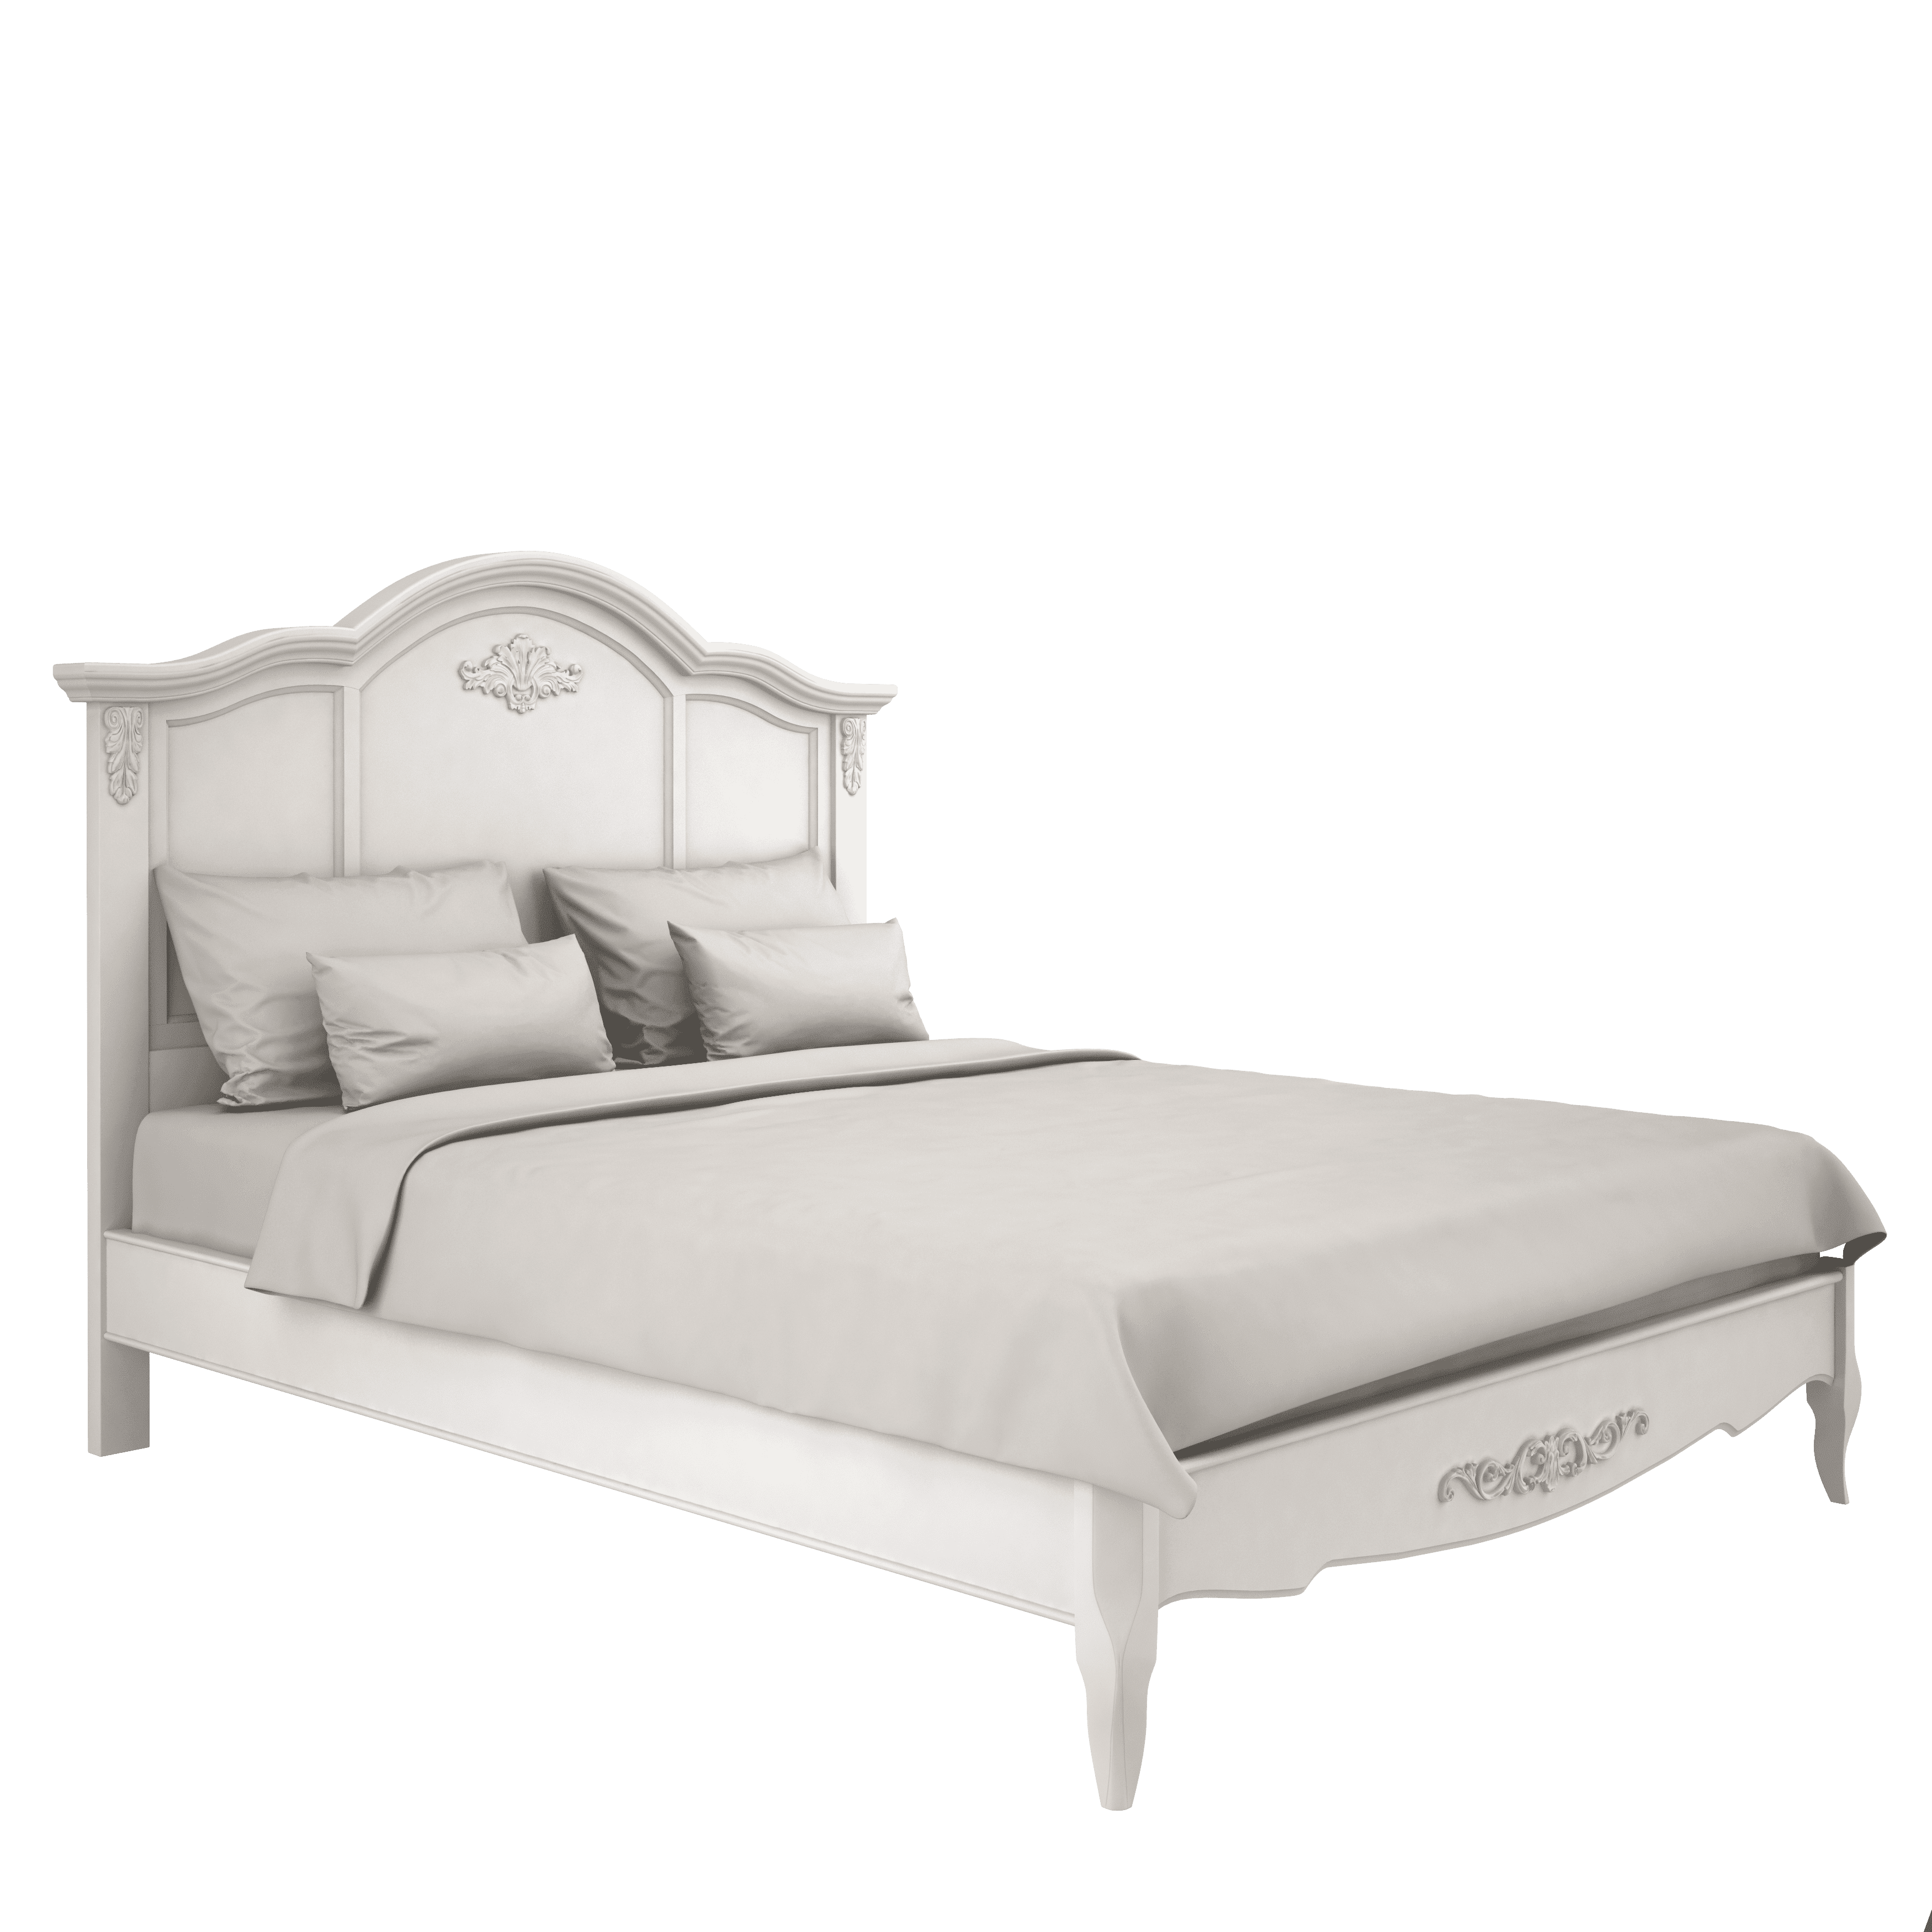 Кровать Aletan Provence, односпальная, 120x200 см, цвет: слоновая кость, размер 138х211х123 см (B202)B202